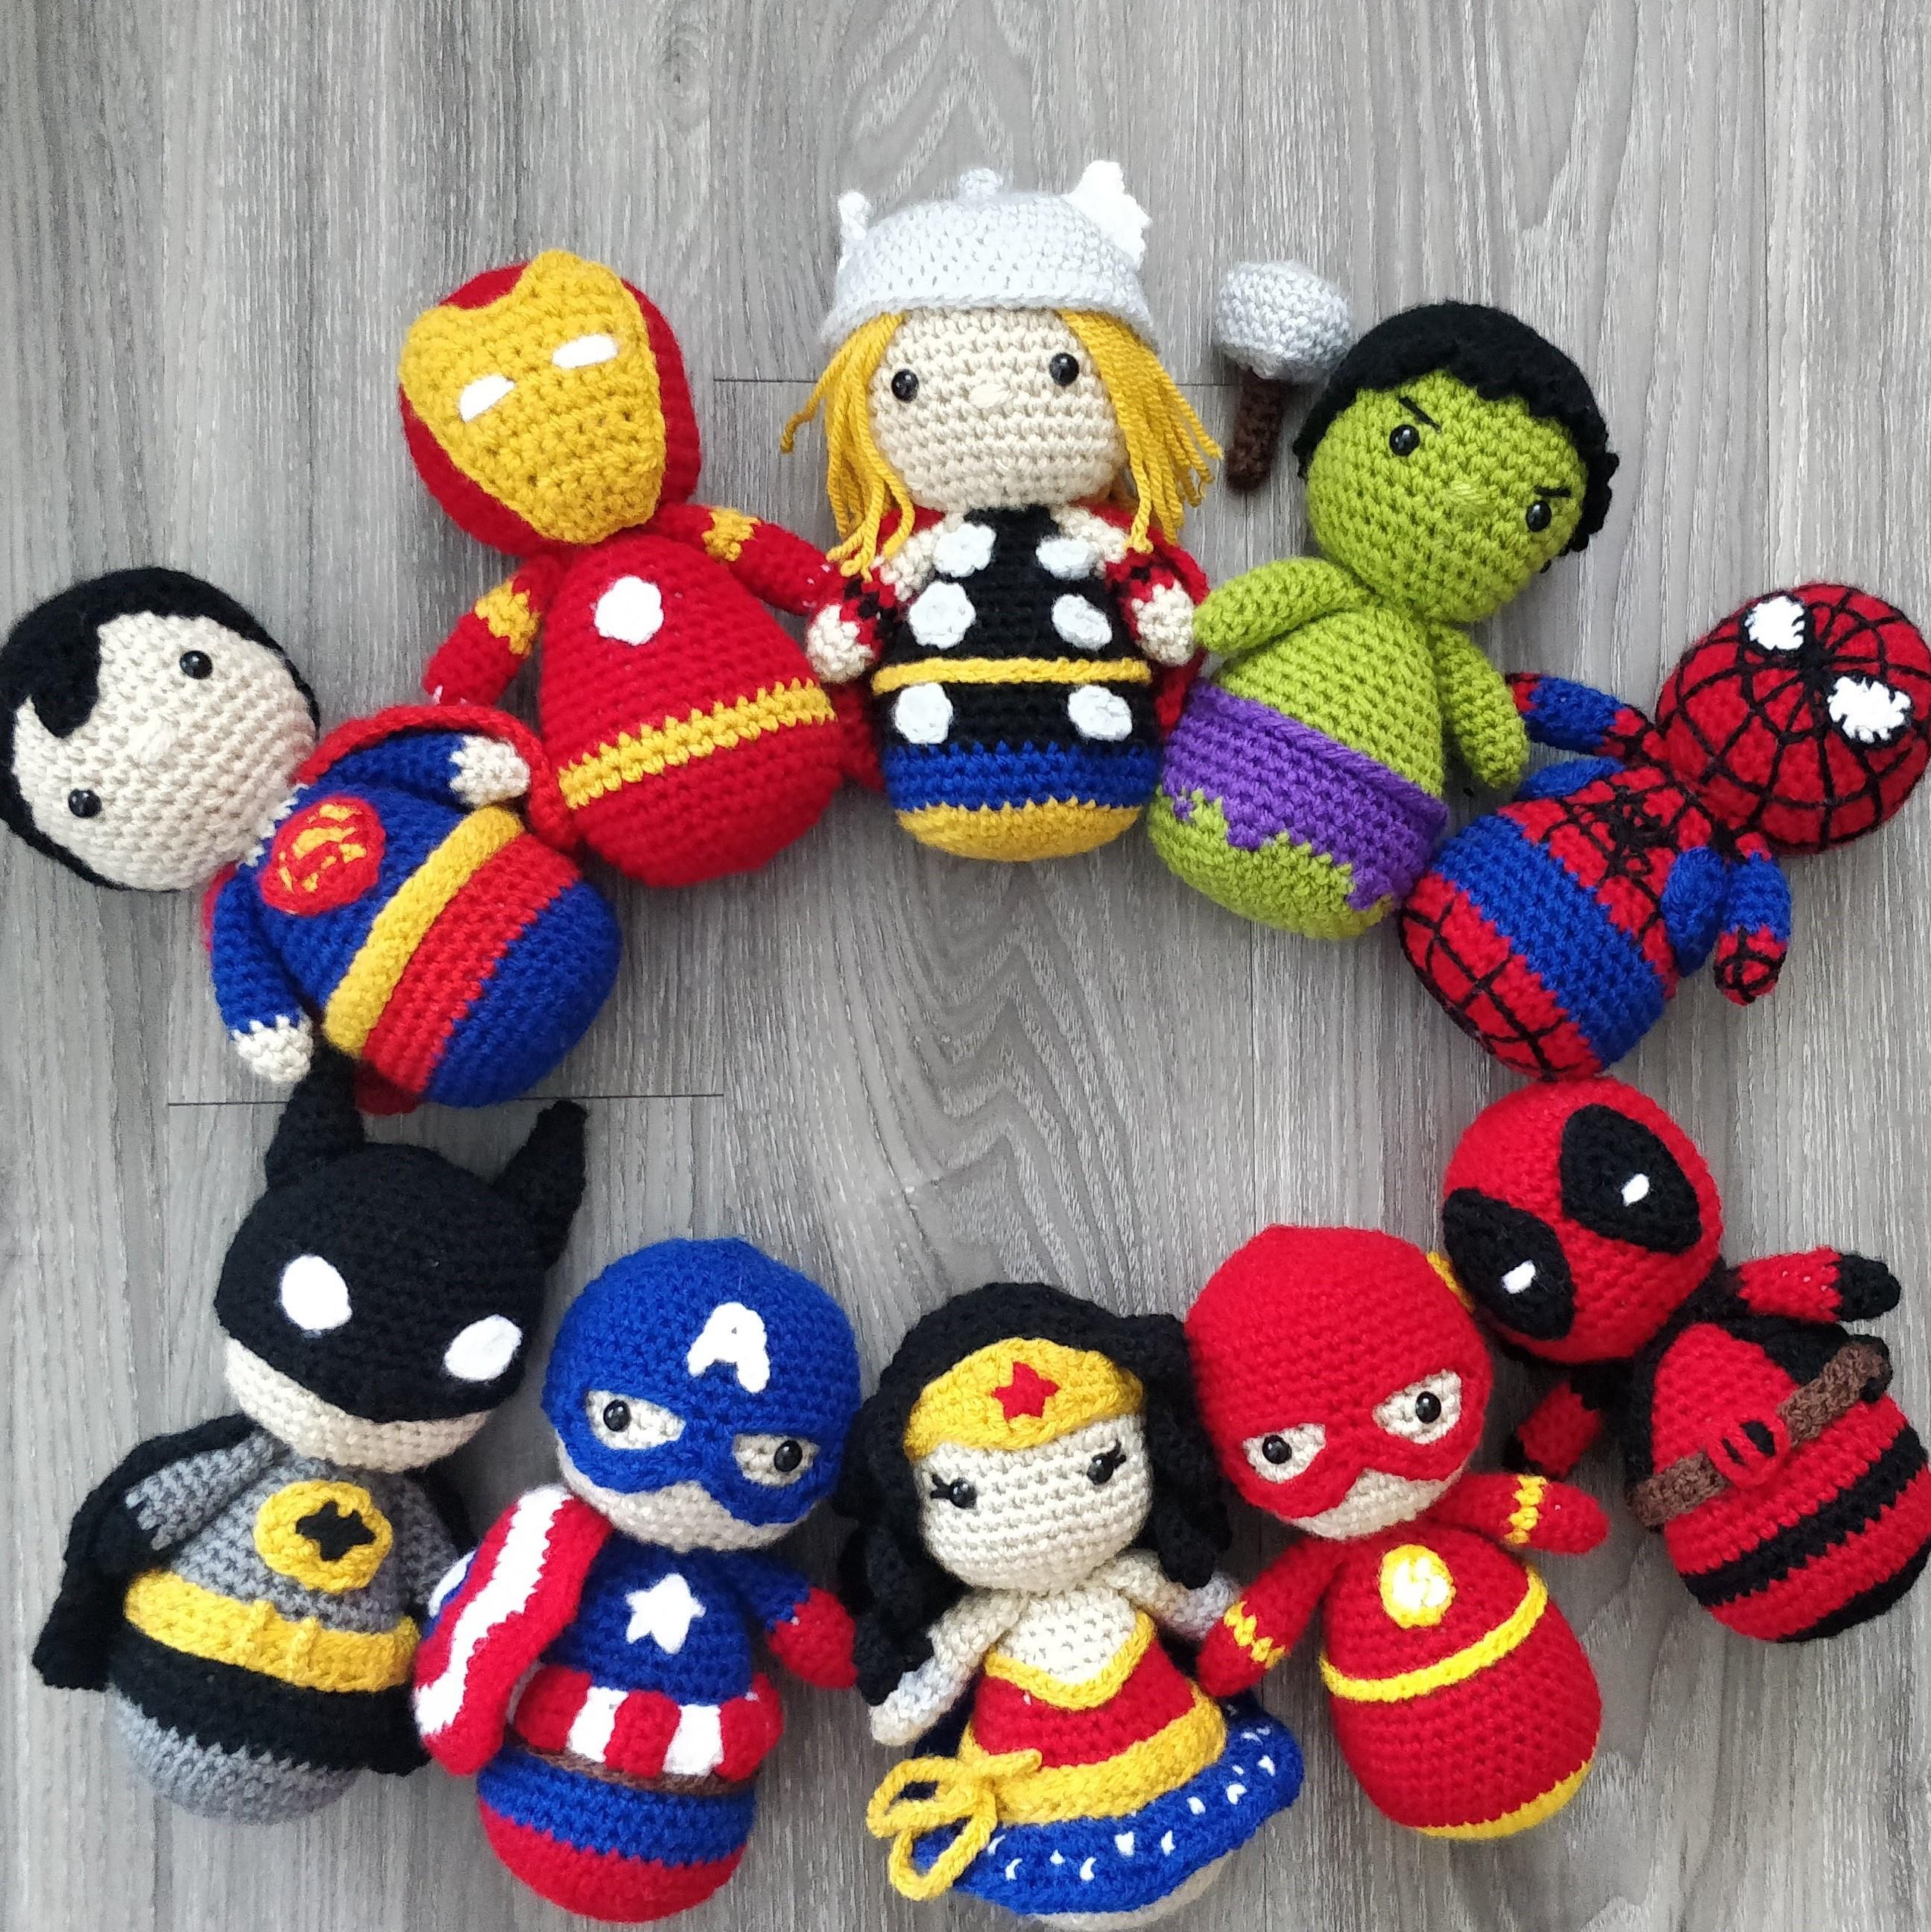 Spider-man comic book hero Marvel crochet toy Amigurumi superhero